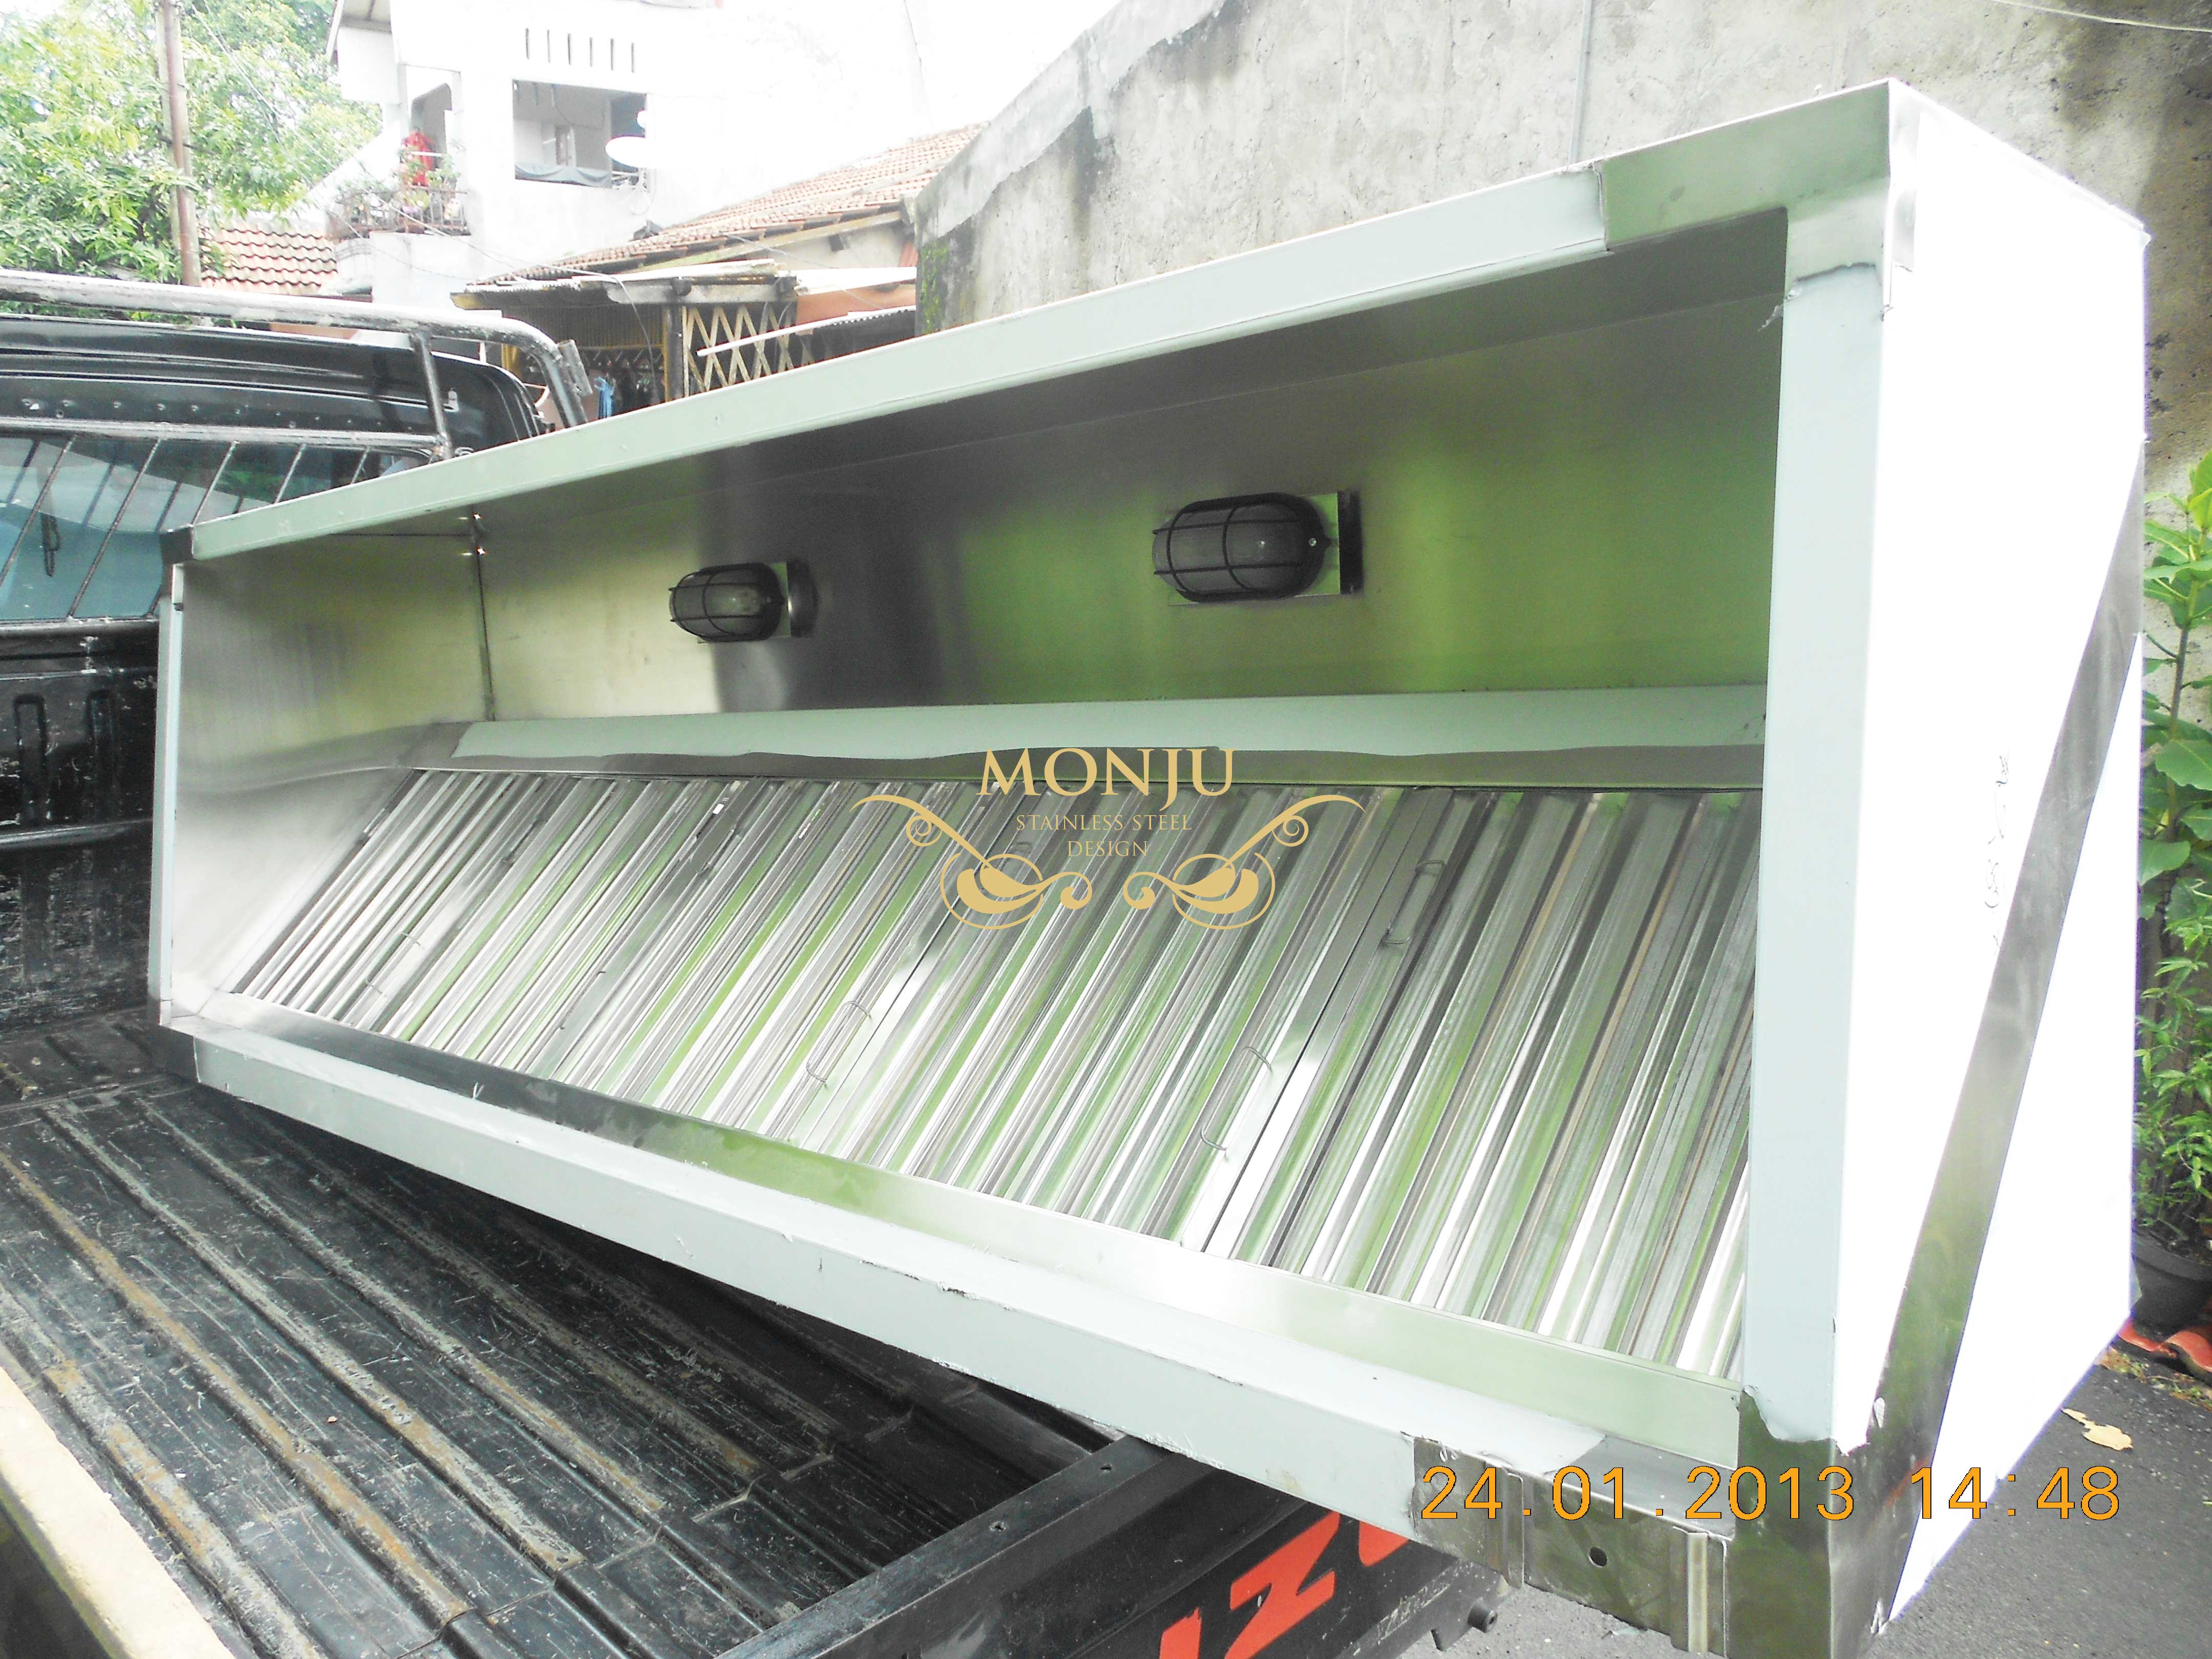 Jasa Ducting Exhaust Hood Dan Instalasi Di Jakarta Dan Tangerang Kitchenset Stainless Di Jakarta Tangerang